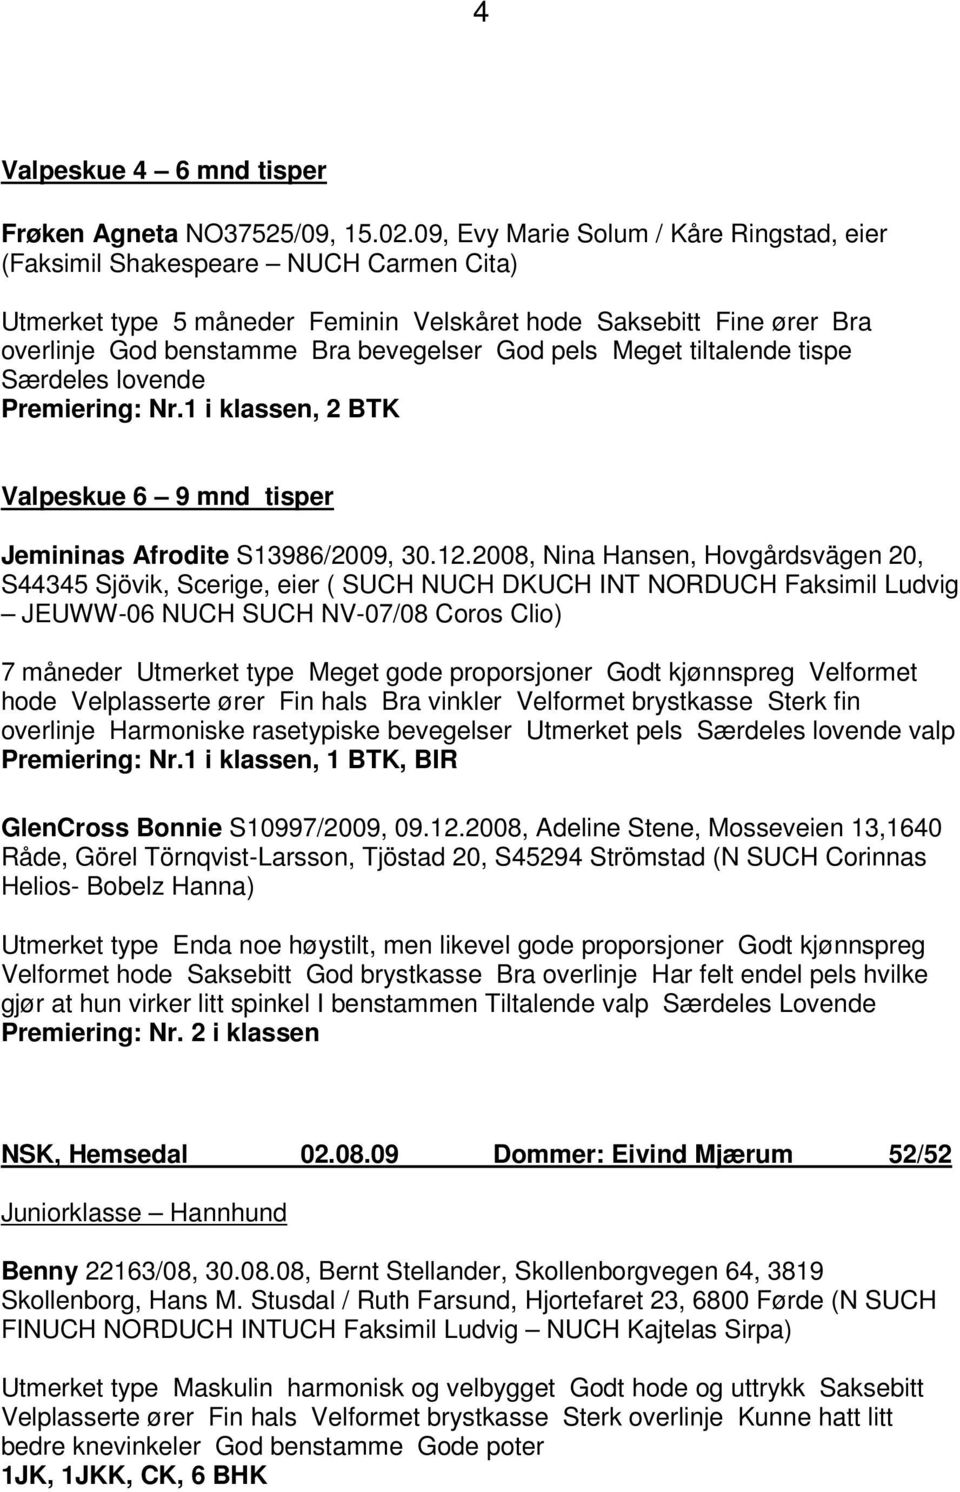 pels Meget tiltalende tispe Særdeles lovende Premiering: Nr.1 i klassen, 2 BTK Valpeskue 6 9 mnd tisper Jemininas Afrodite S13986/2009, 30.12.